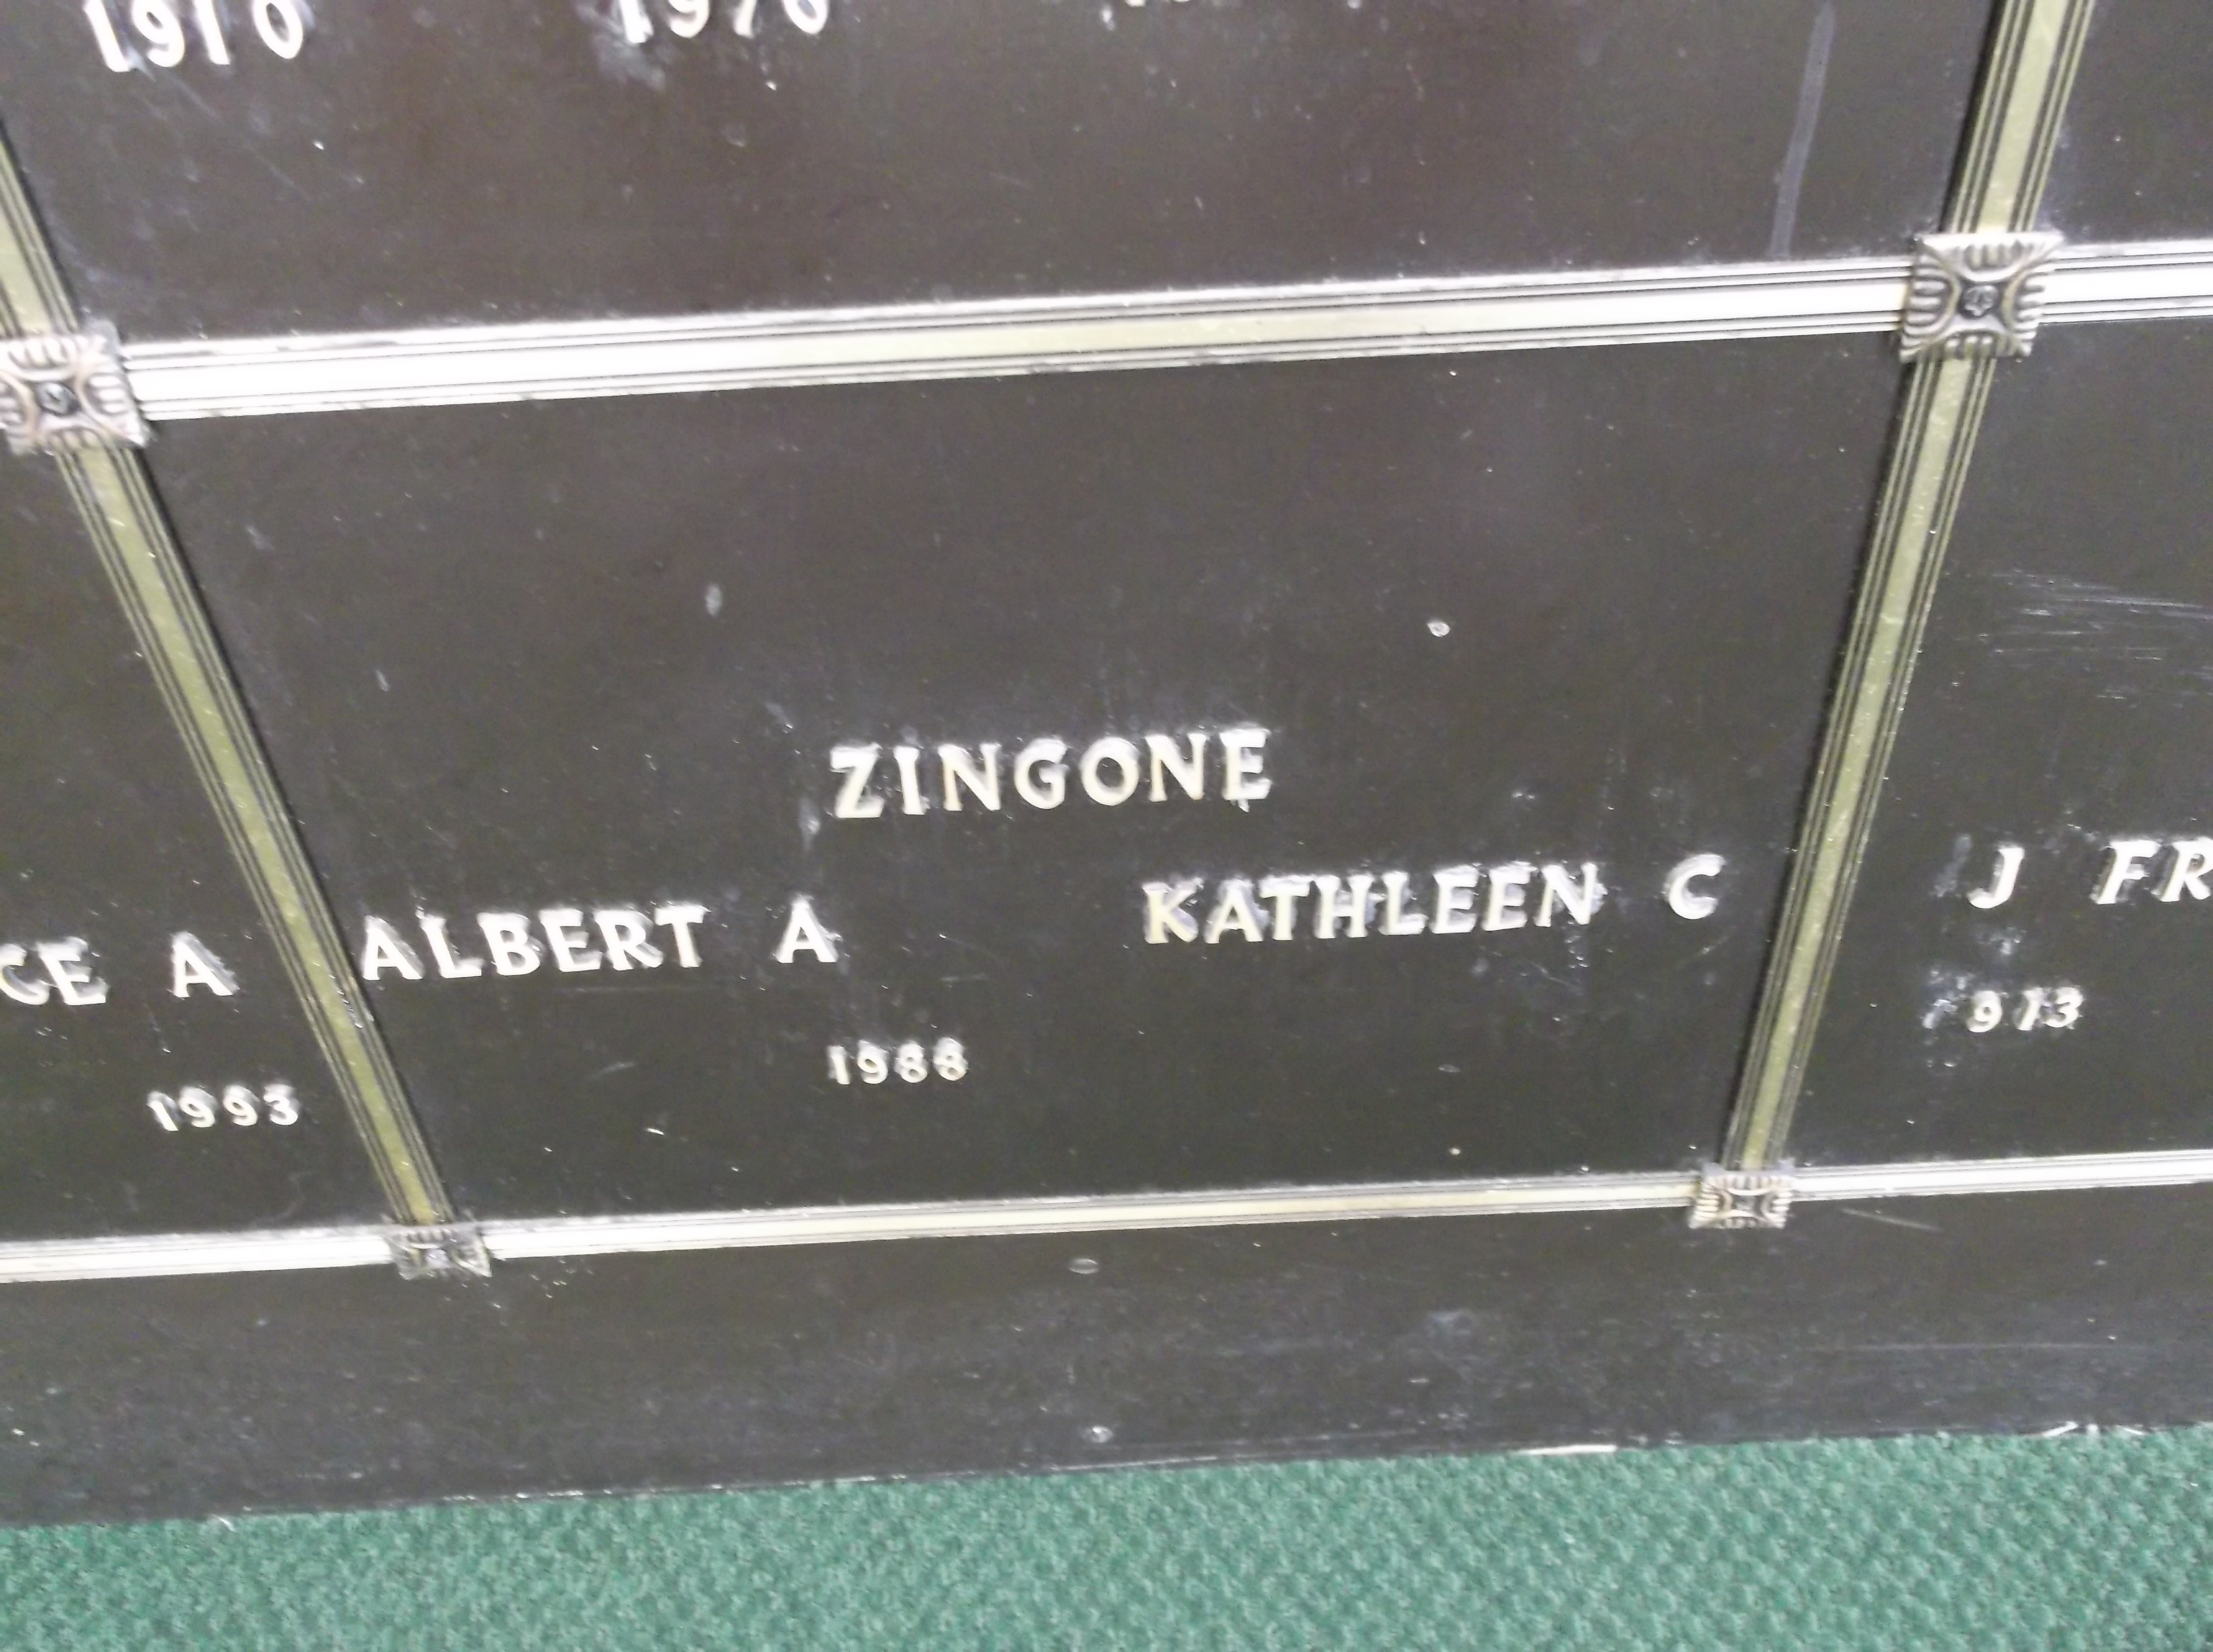 Albert A Zingone